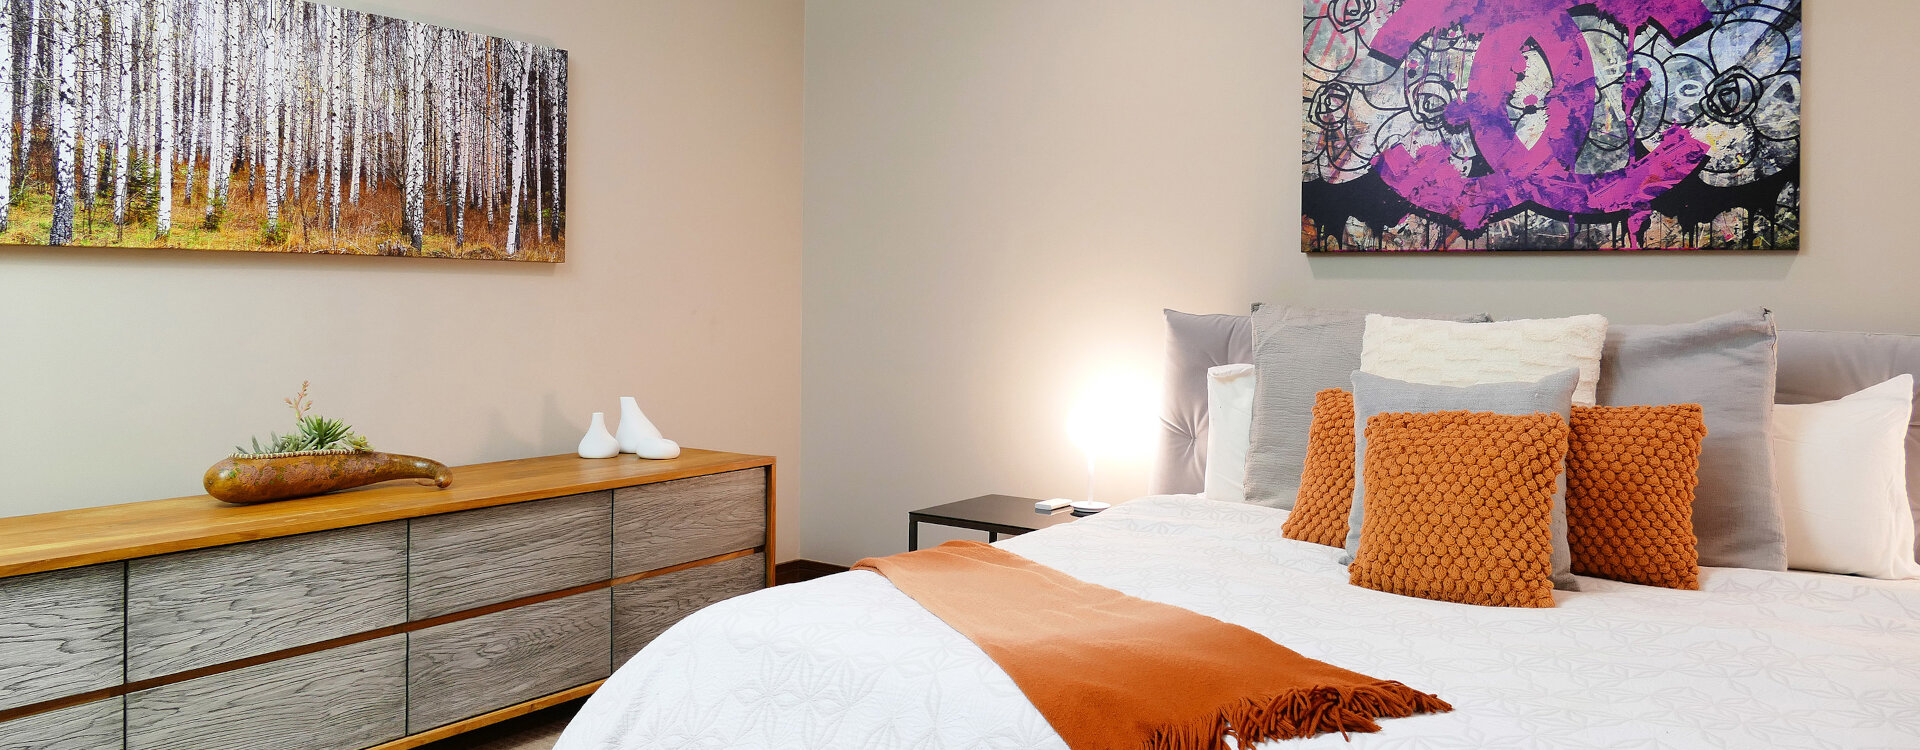 11.01-telluride-parkside-retreat-lower-guest-bedroom